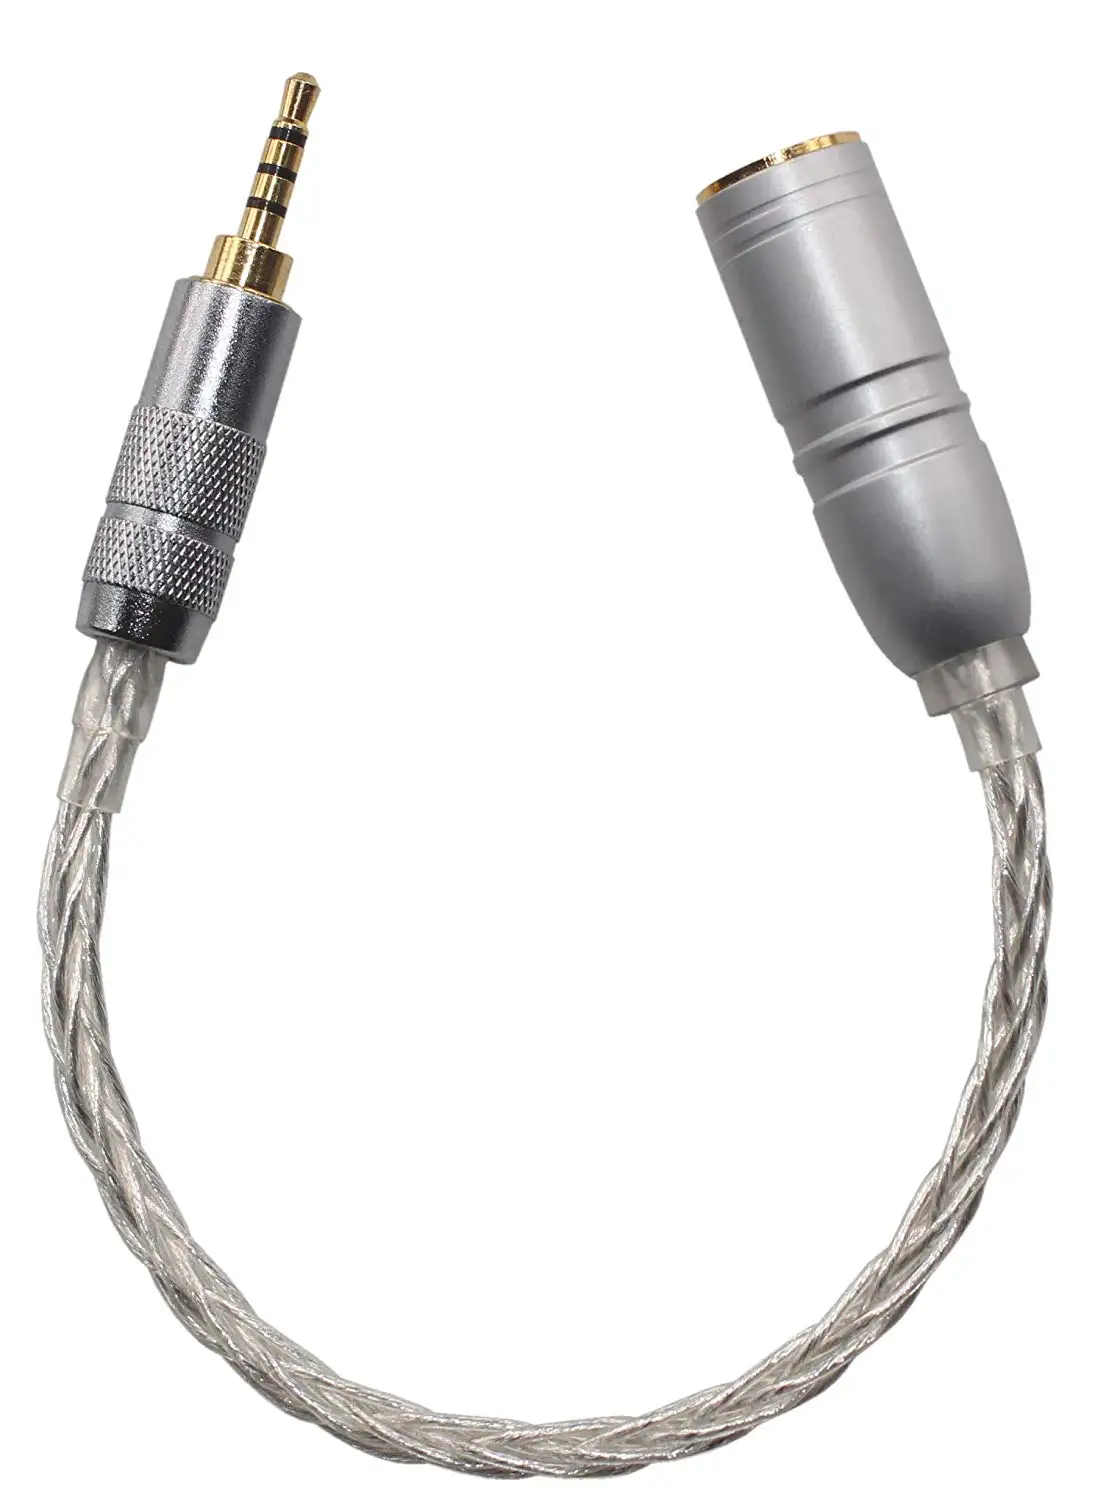 

2.5mm Trrs Balanced Male to 4.4MM Balanced Female Cable, Headphone Audio Adapter for Astell&Kern AK100II, AK120II, AK240, AK380,